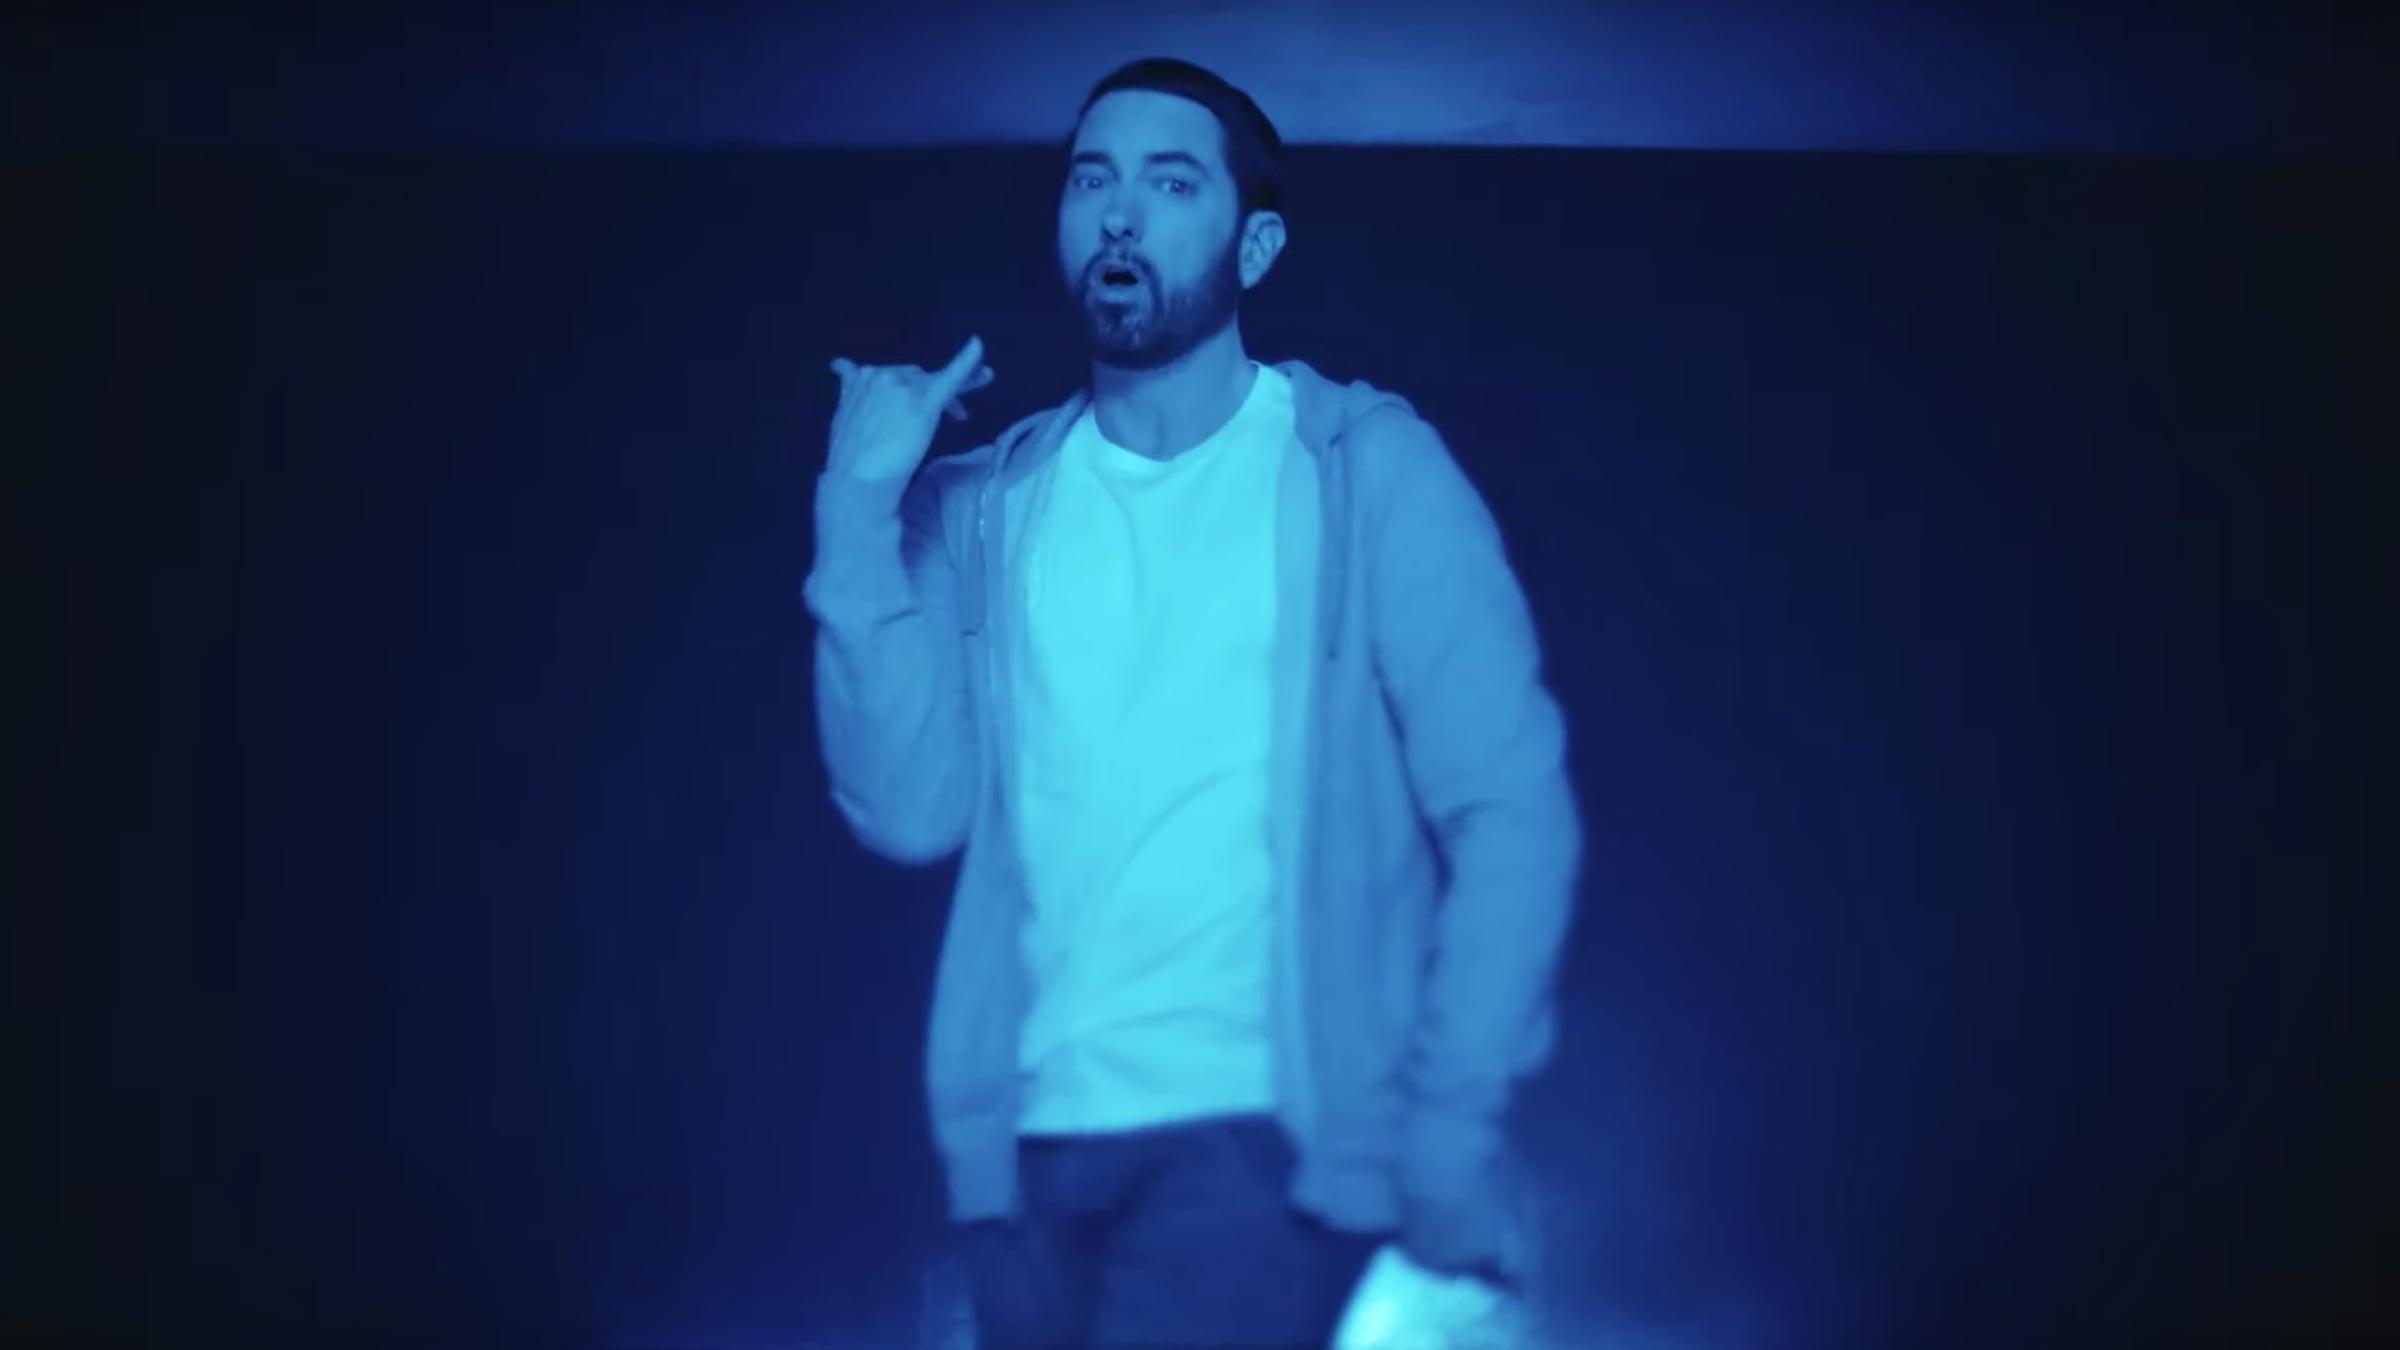 Eminem's graphic Darkness music video calls for gun control